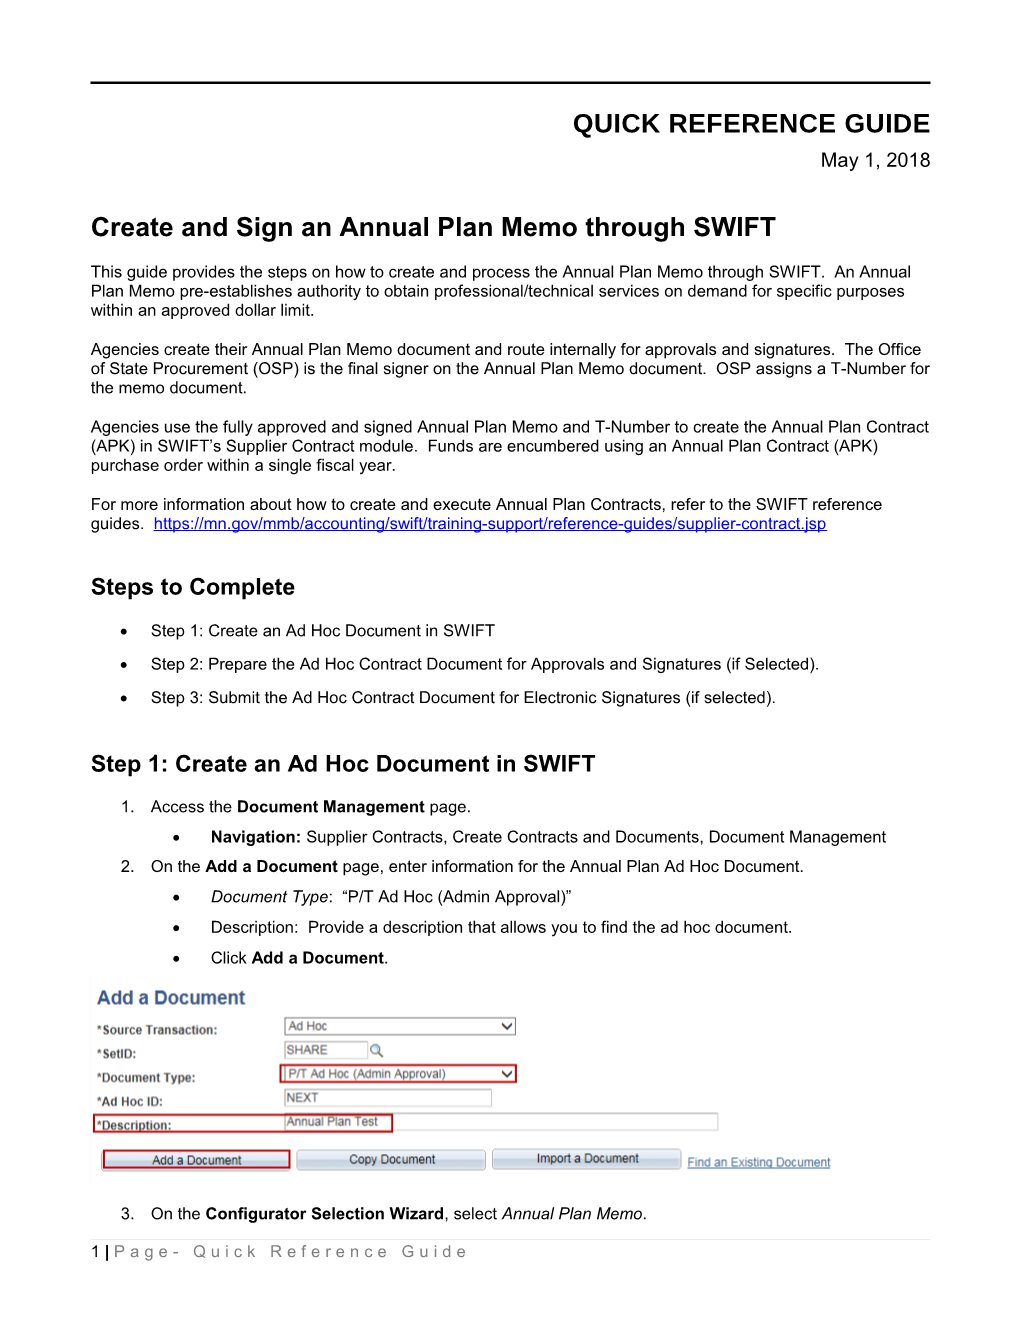 Create and Sign an Annual Plan Through SWIFT